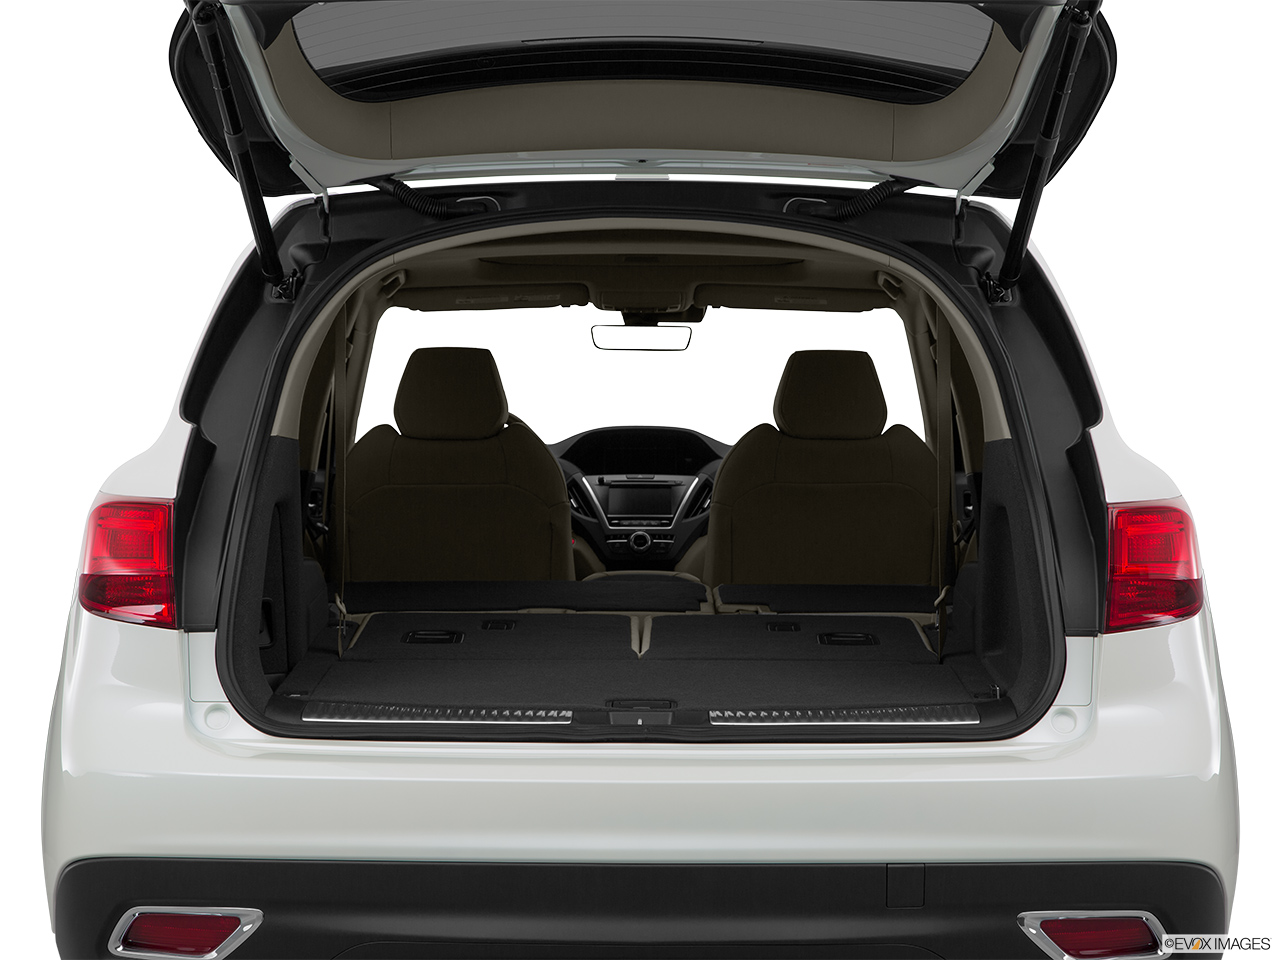 2016 Acura MDX SH-AWD Hatchback & SUV rear angle. 